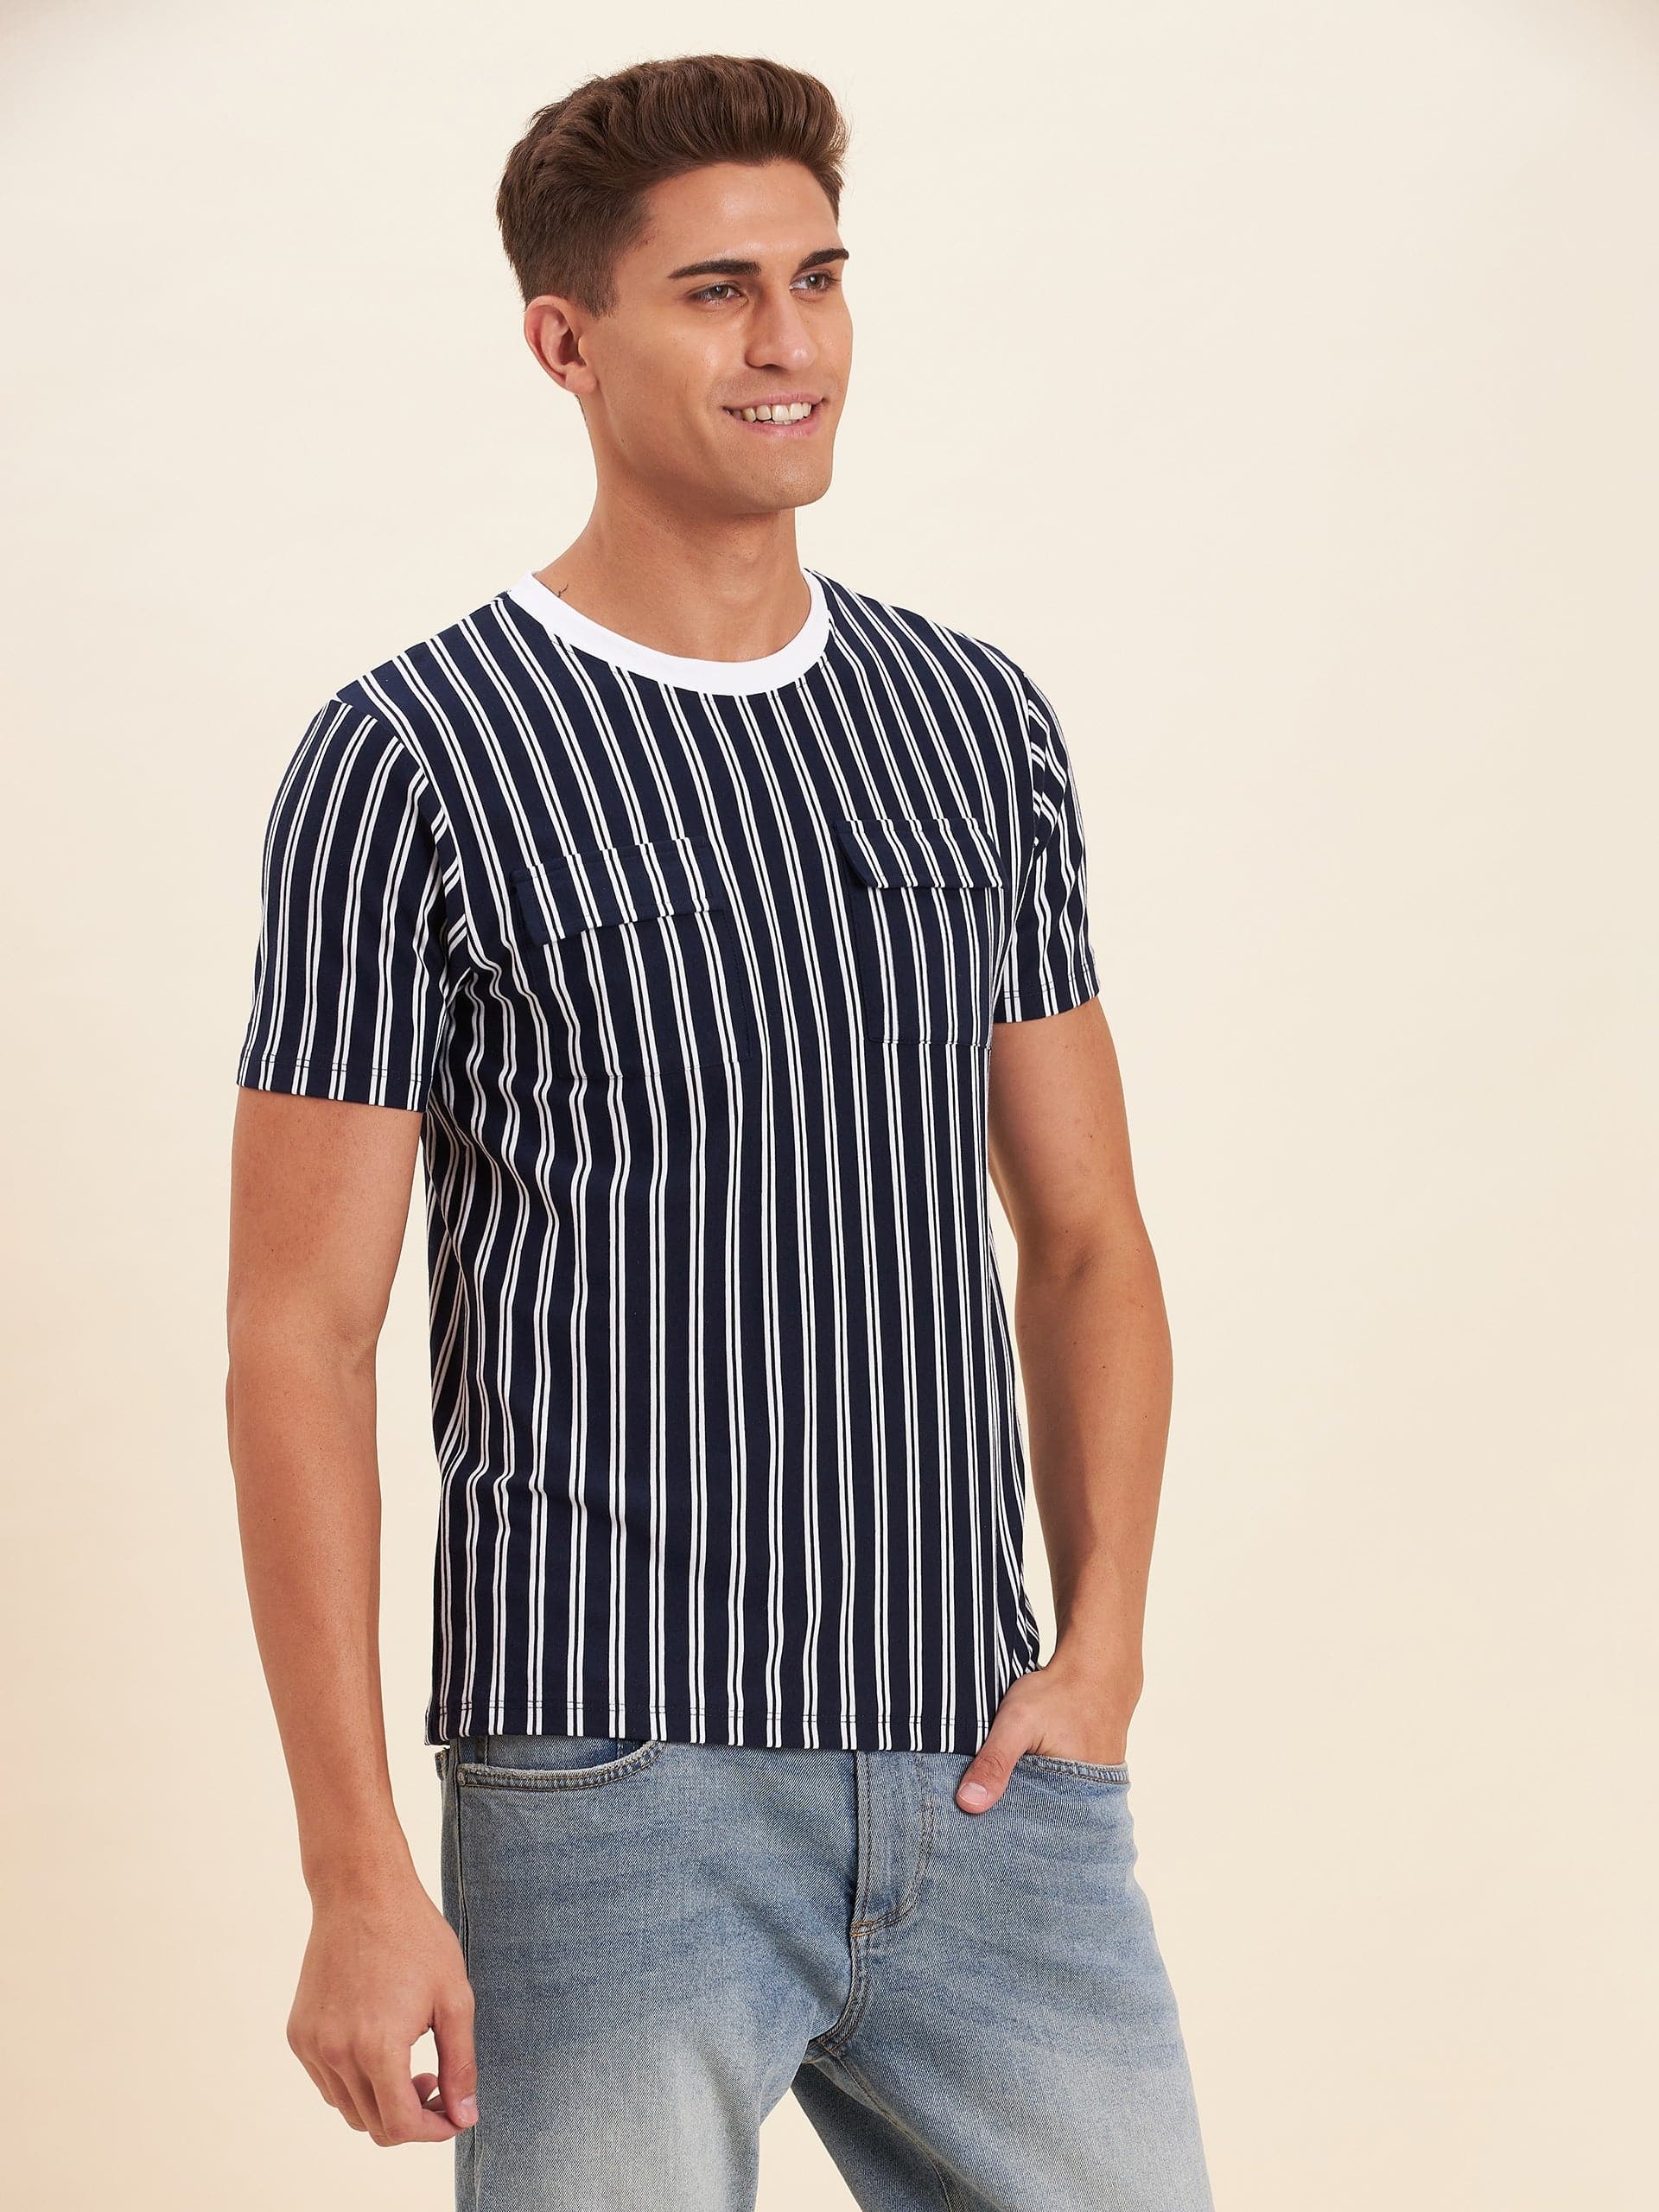 Men's Navy & White Stripes Double Pocket Cotton T-Shirt - LYUSH-MASCLN